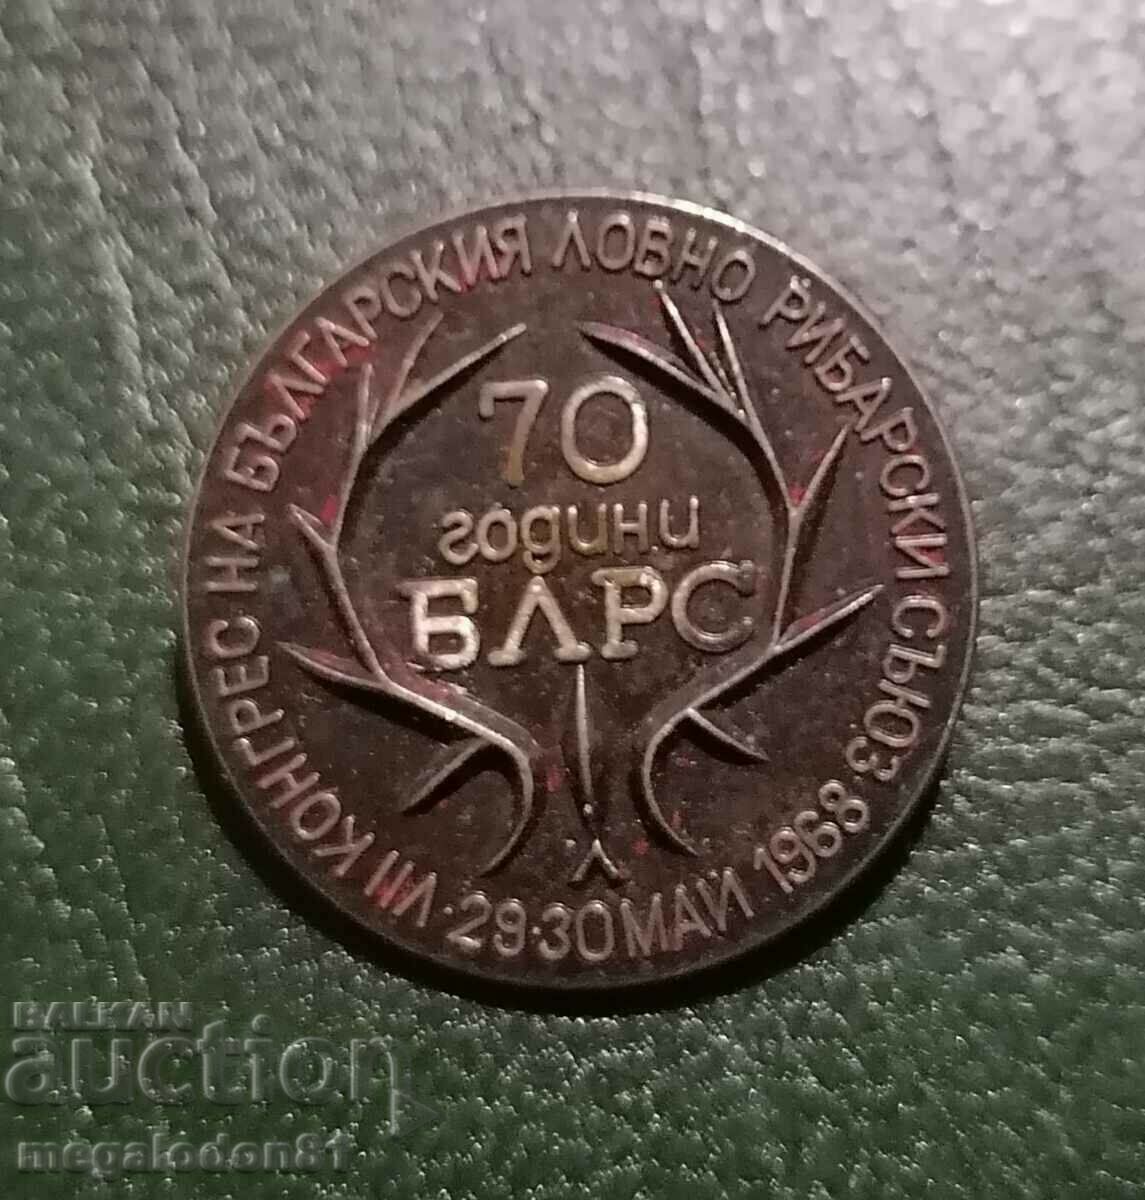 Bulgaria - 70 years of BLRS